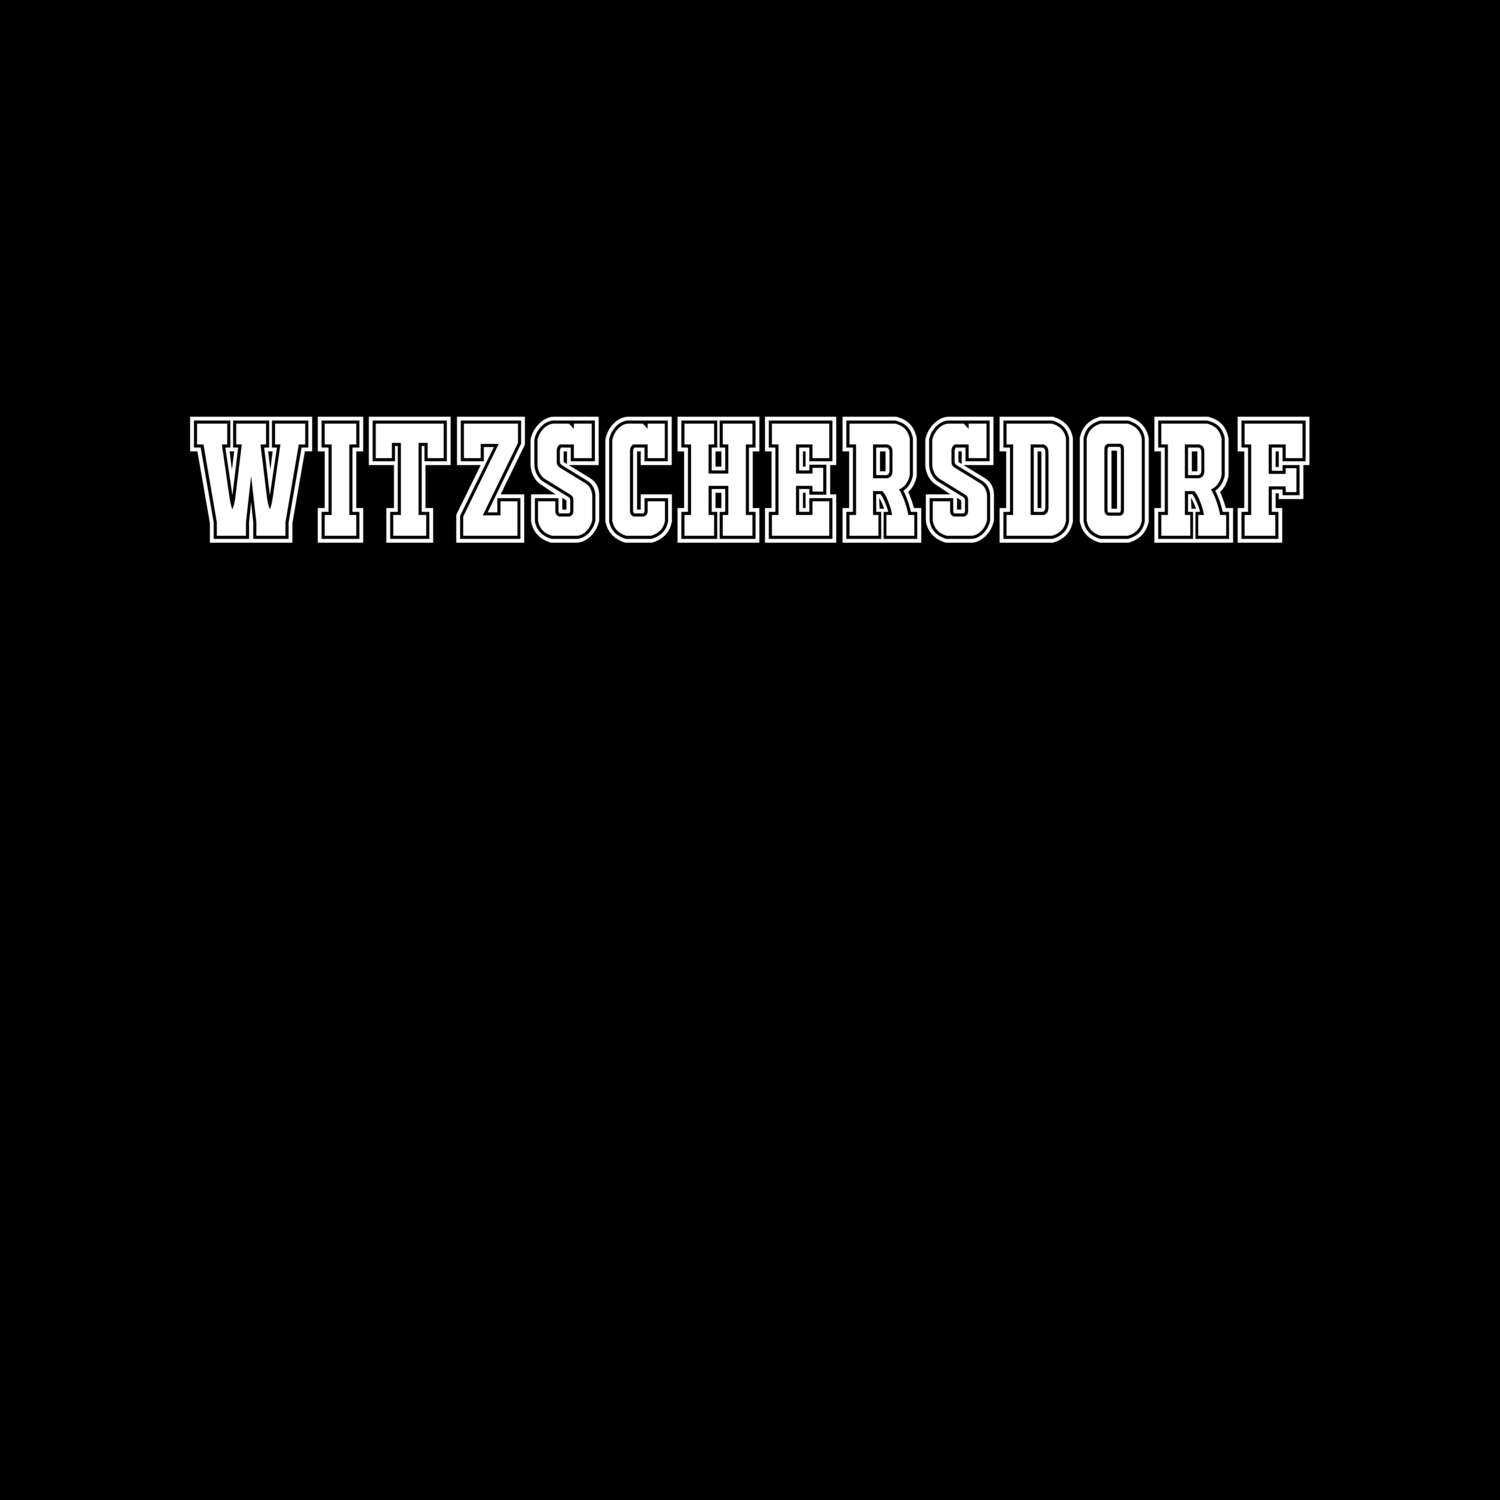 Witzschersdorf T-Shirt »Classic«